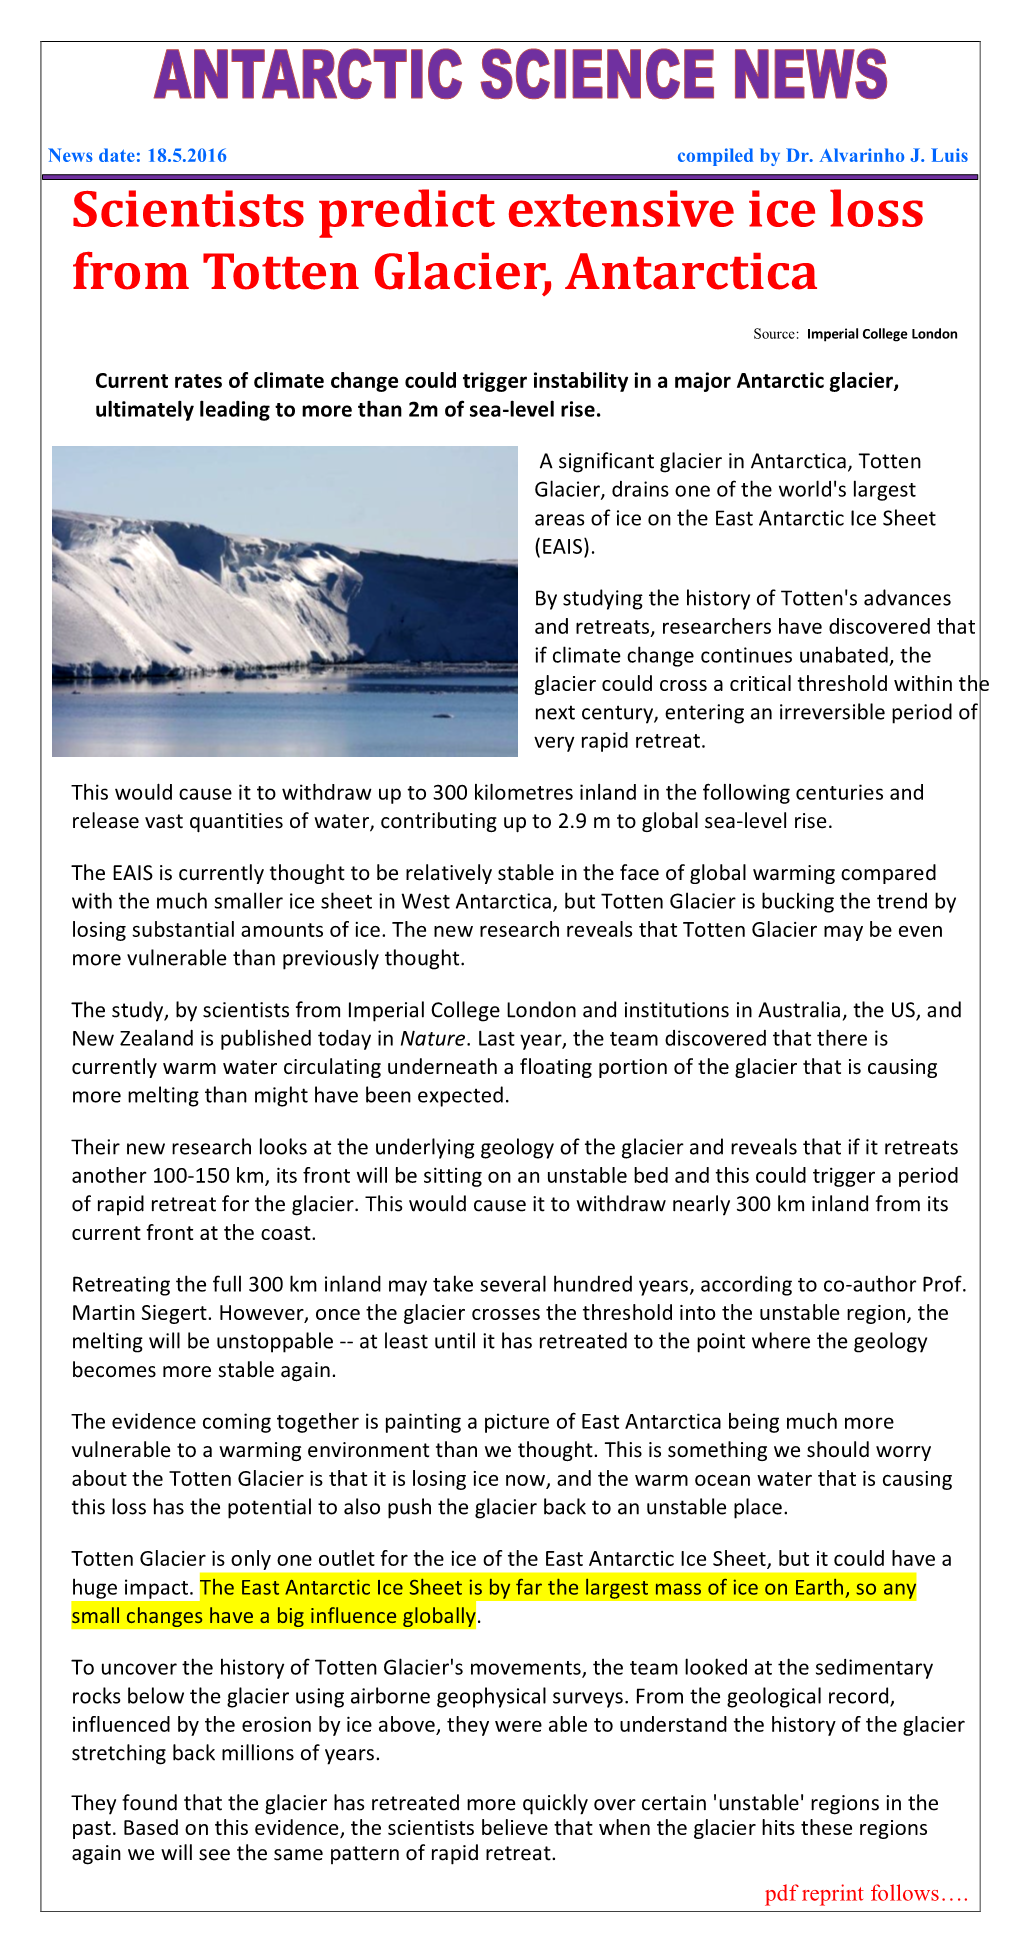 Scientists Predict Extensive Ice Loss from Totten Glacier, Antarctica